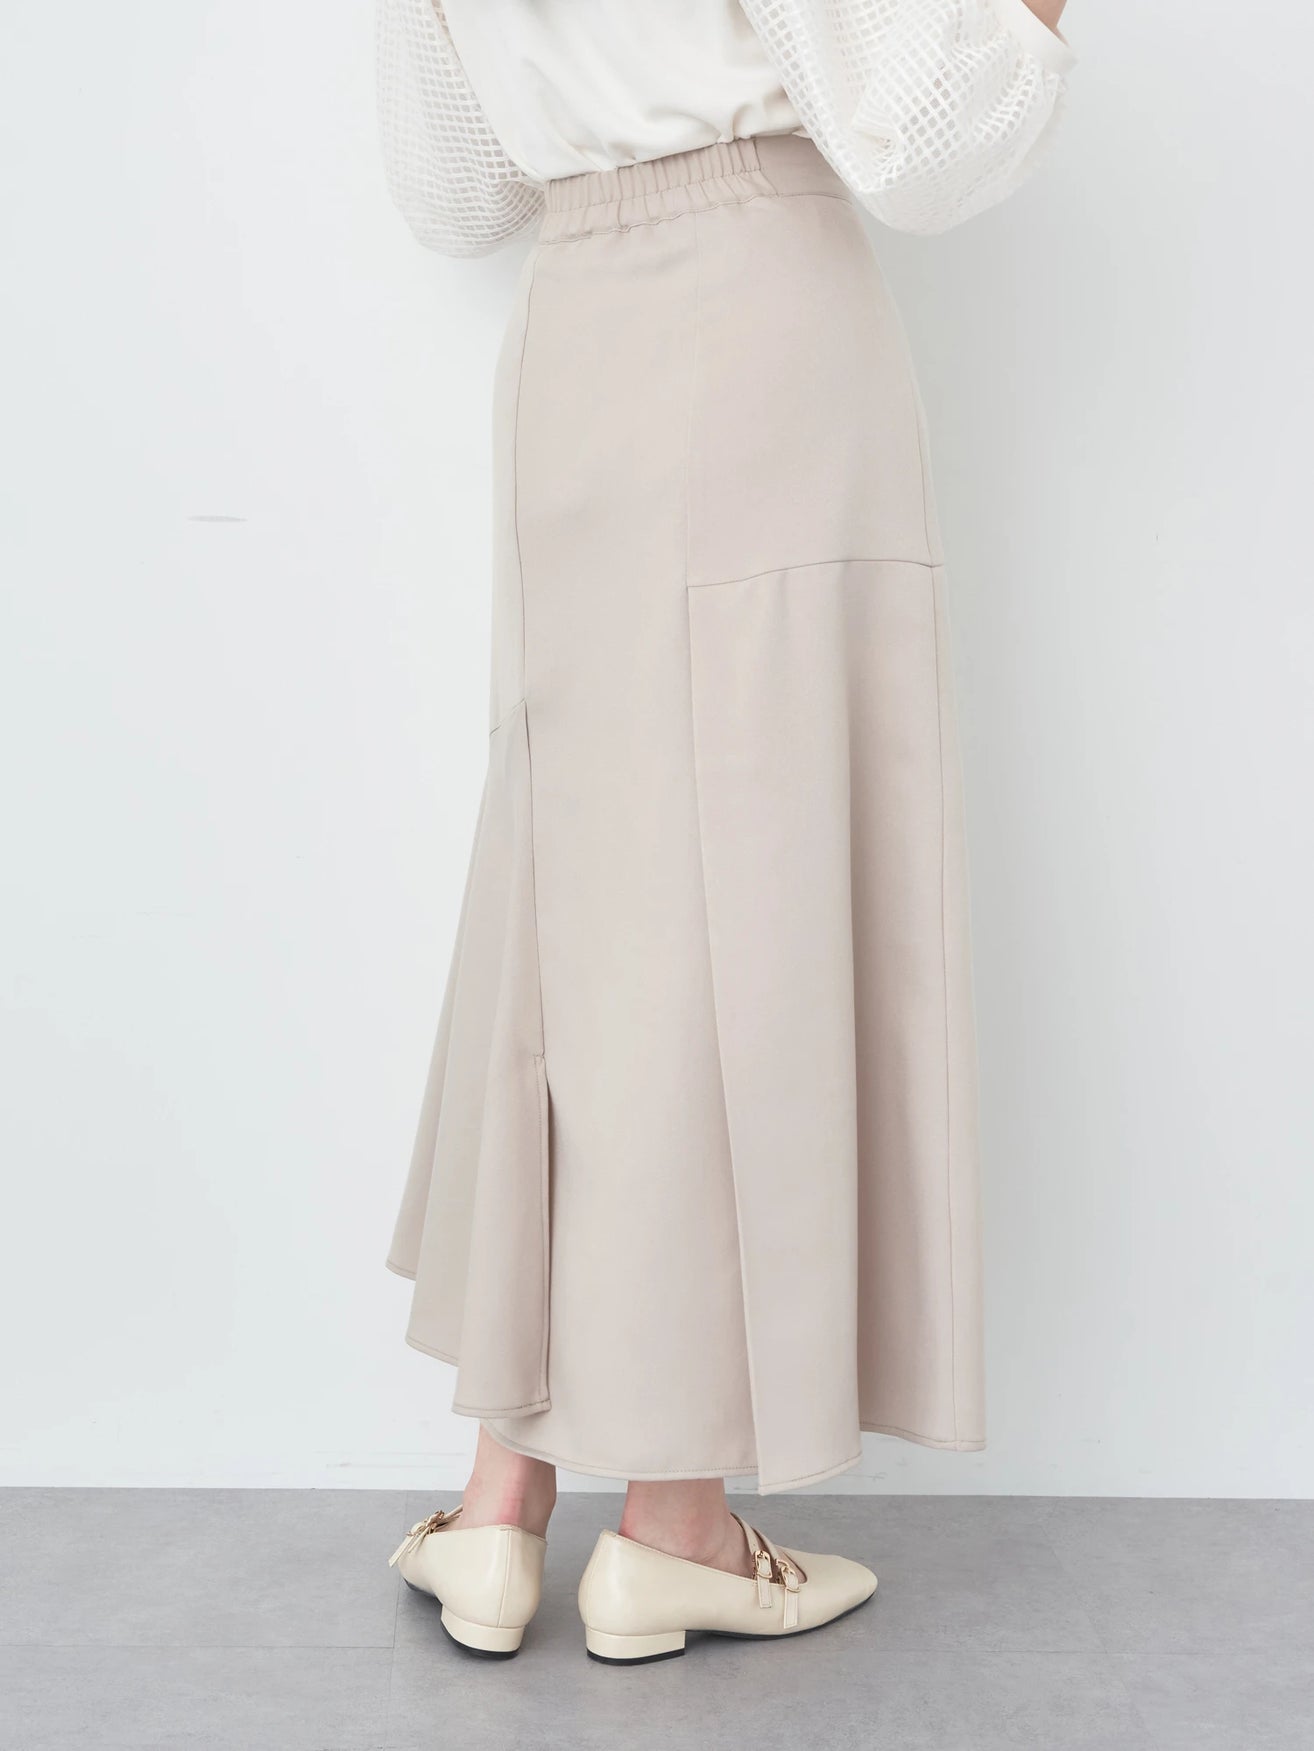 Takashi Asymmetrical Cut-Out Skirt